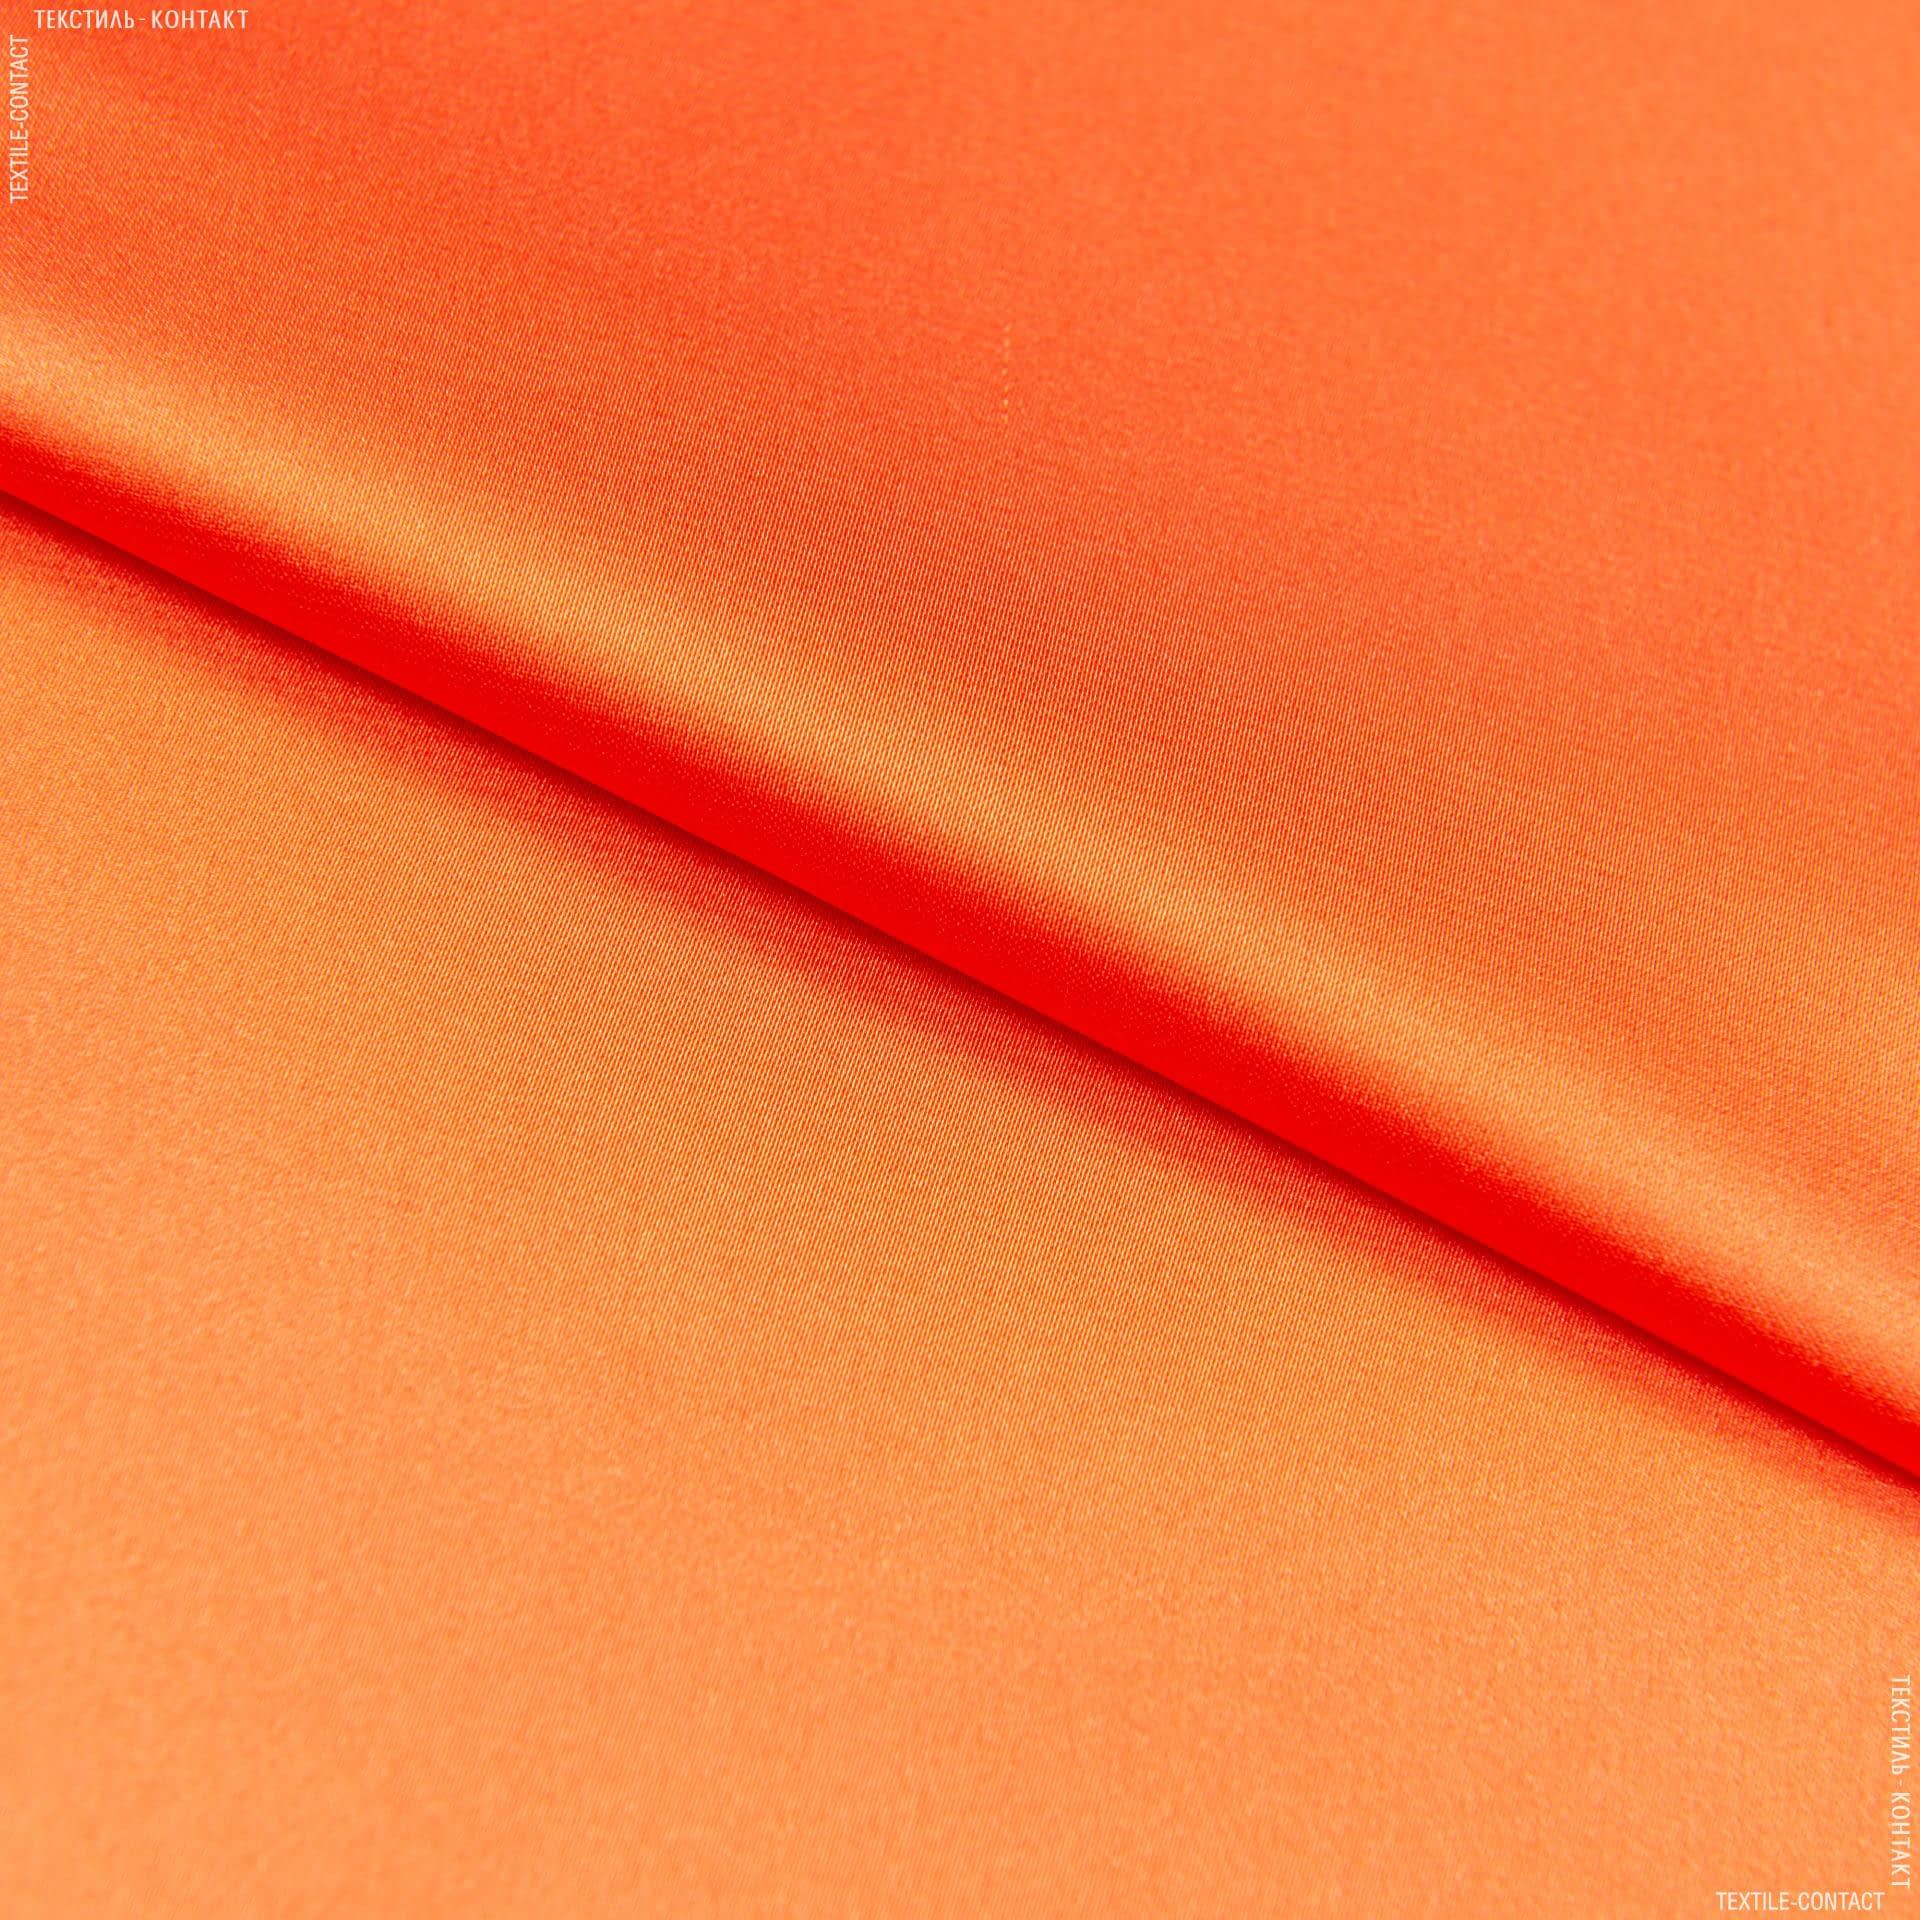 Тканини для суконь - Шовк штучний стрейч помаранчевий